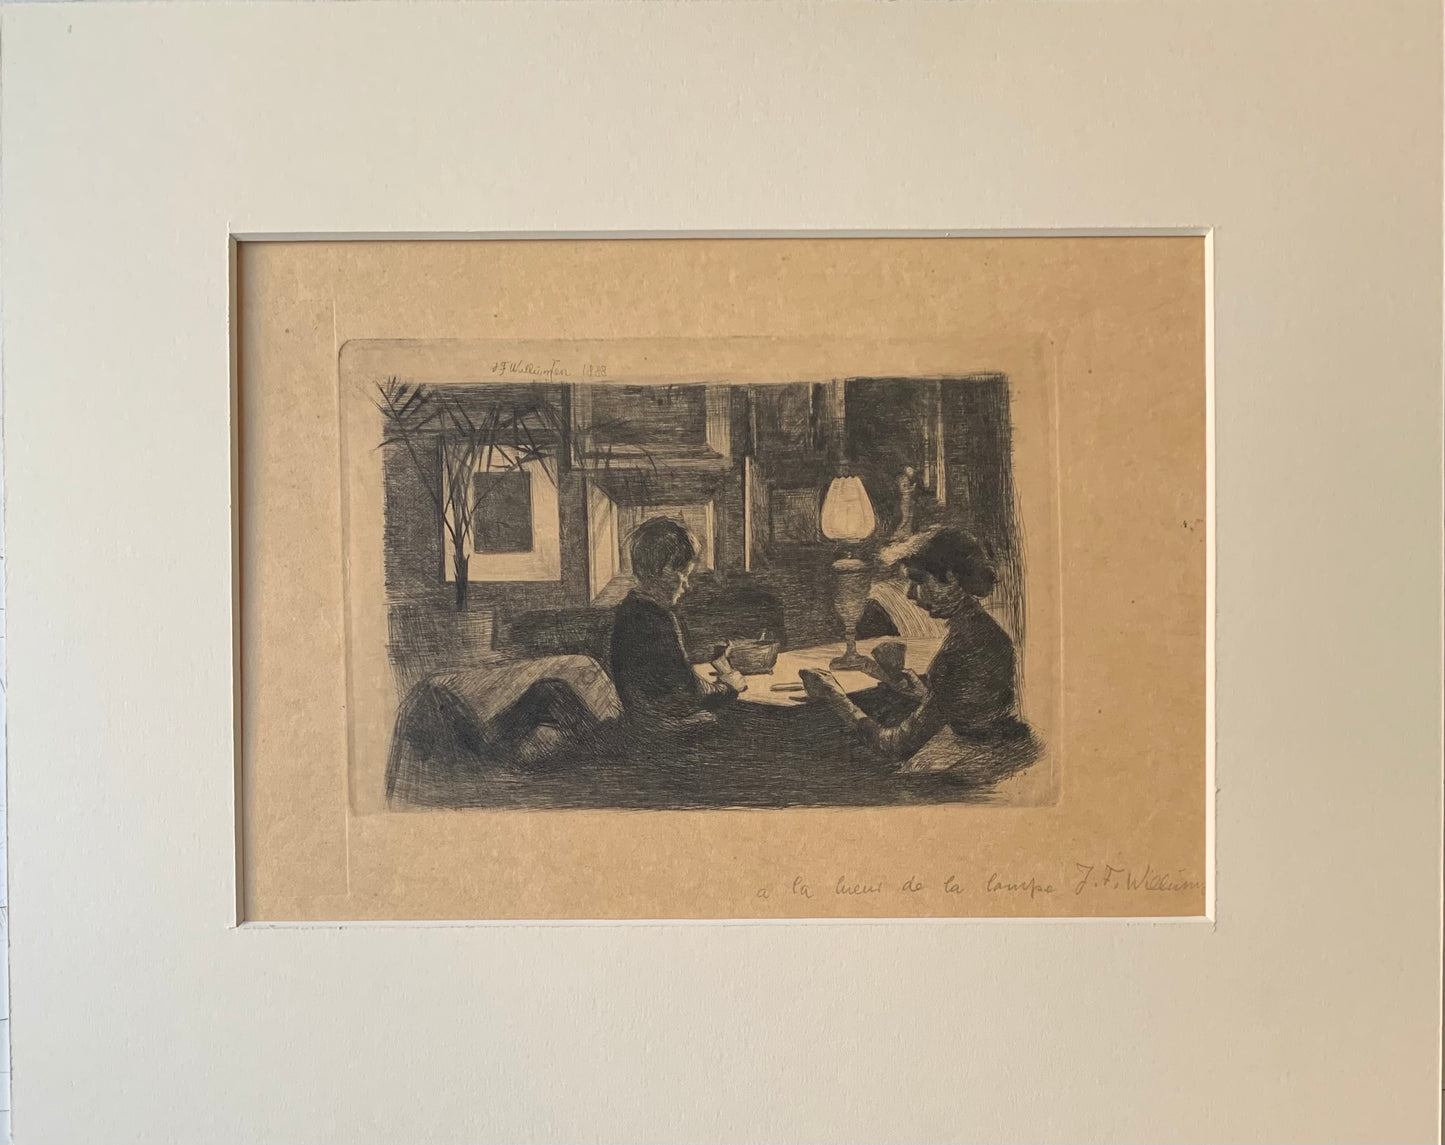 JF Willumsen. "Th. Niss' living room", 1888